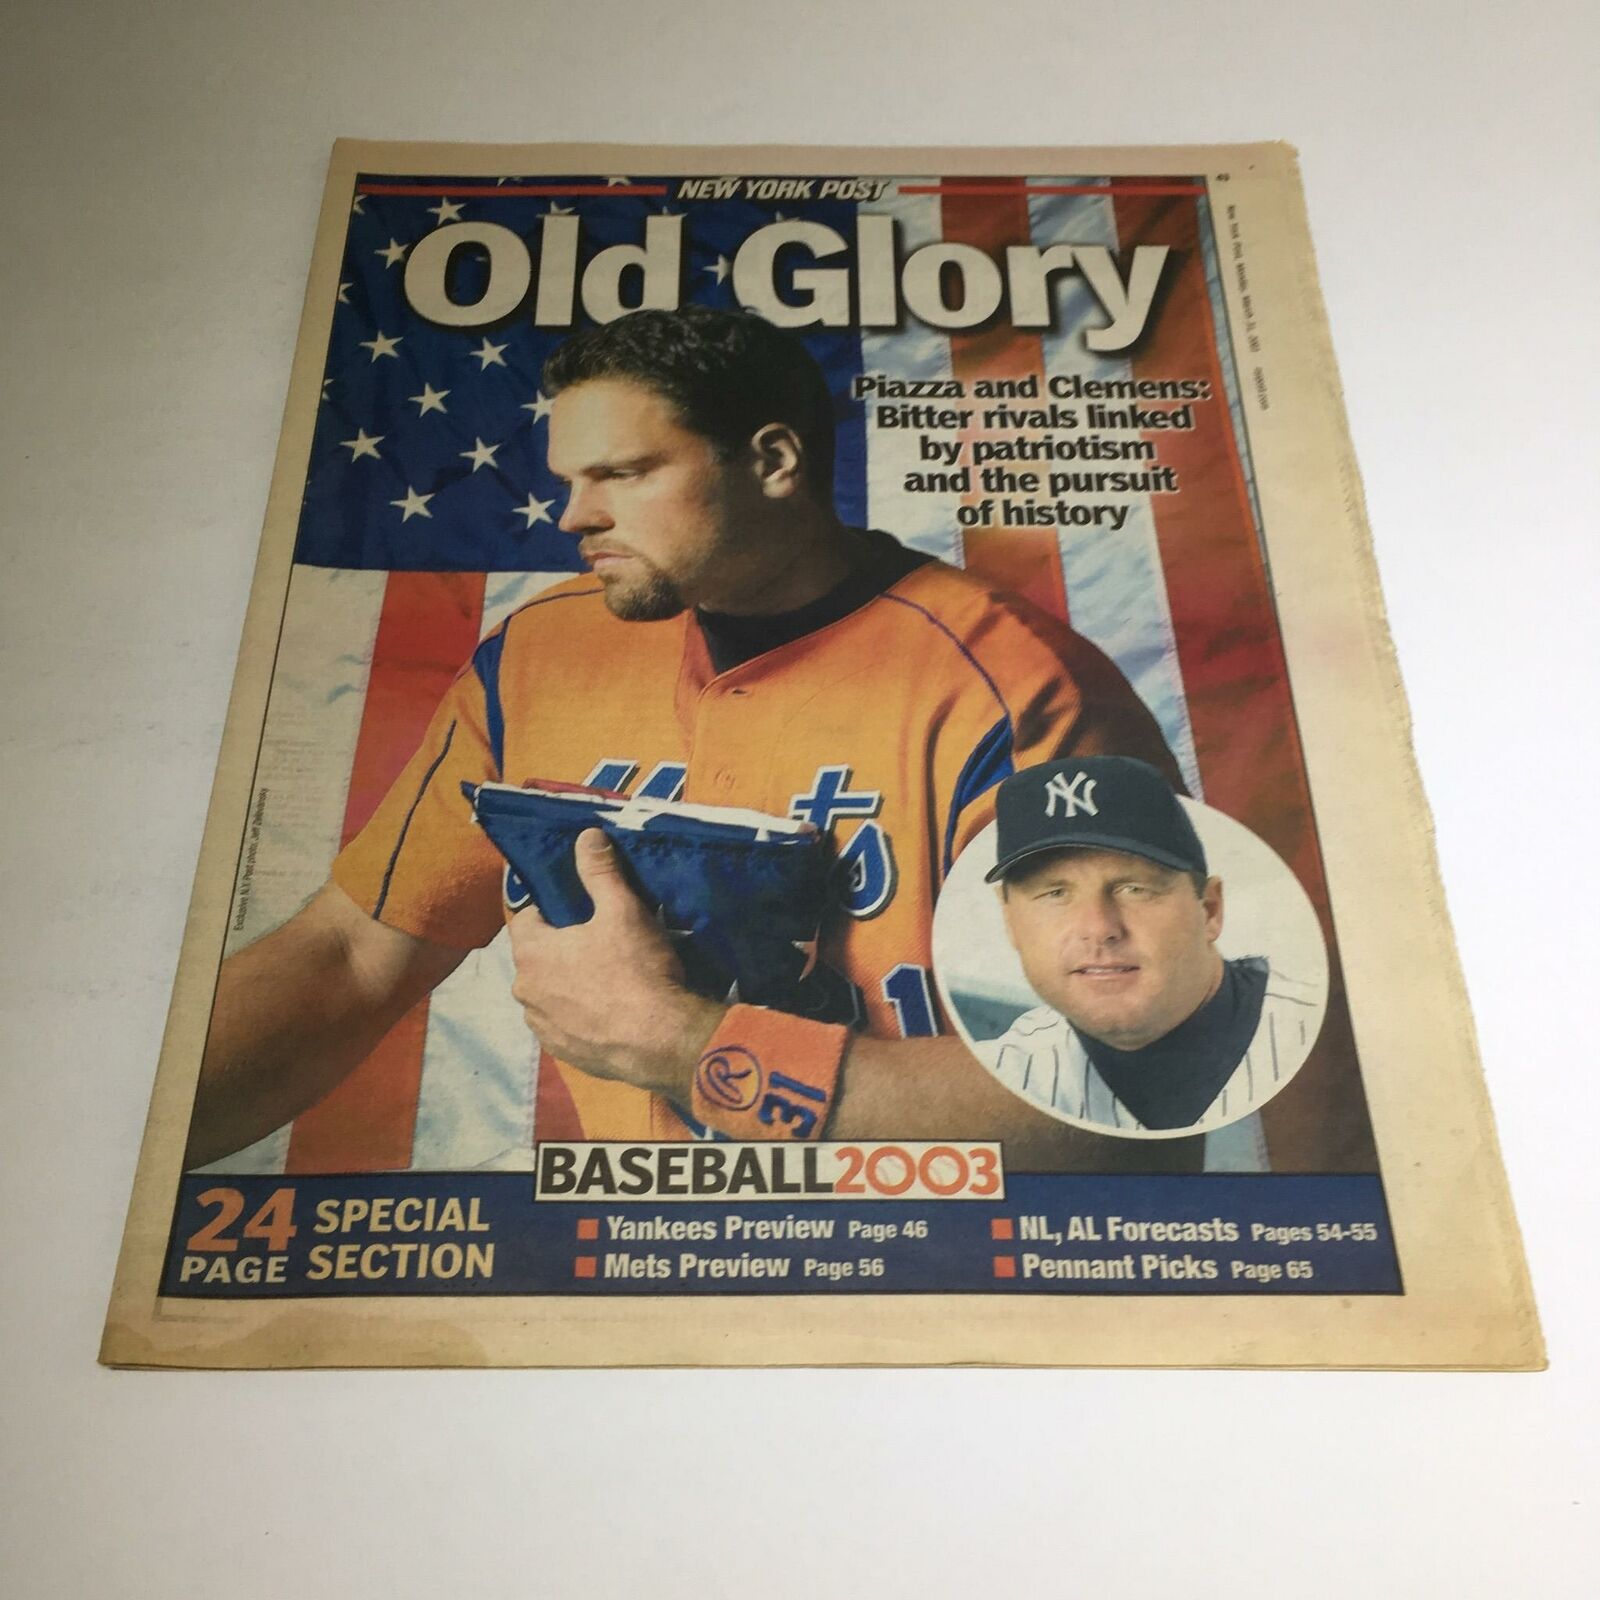 New York Post: March 31 2003, Old Glory, Baseball 2003